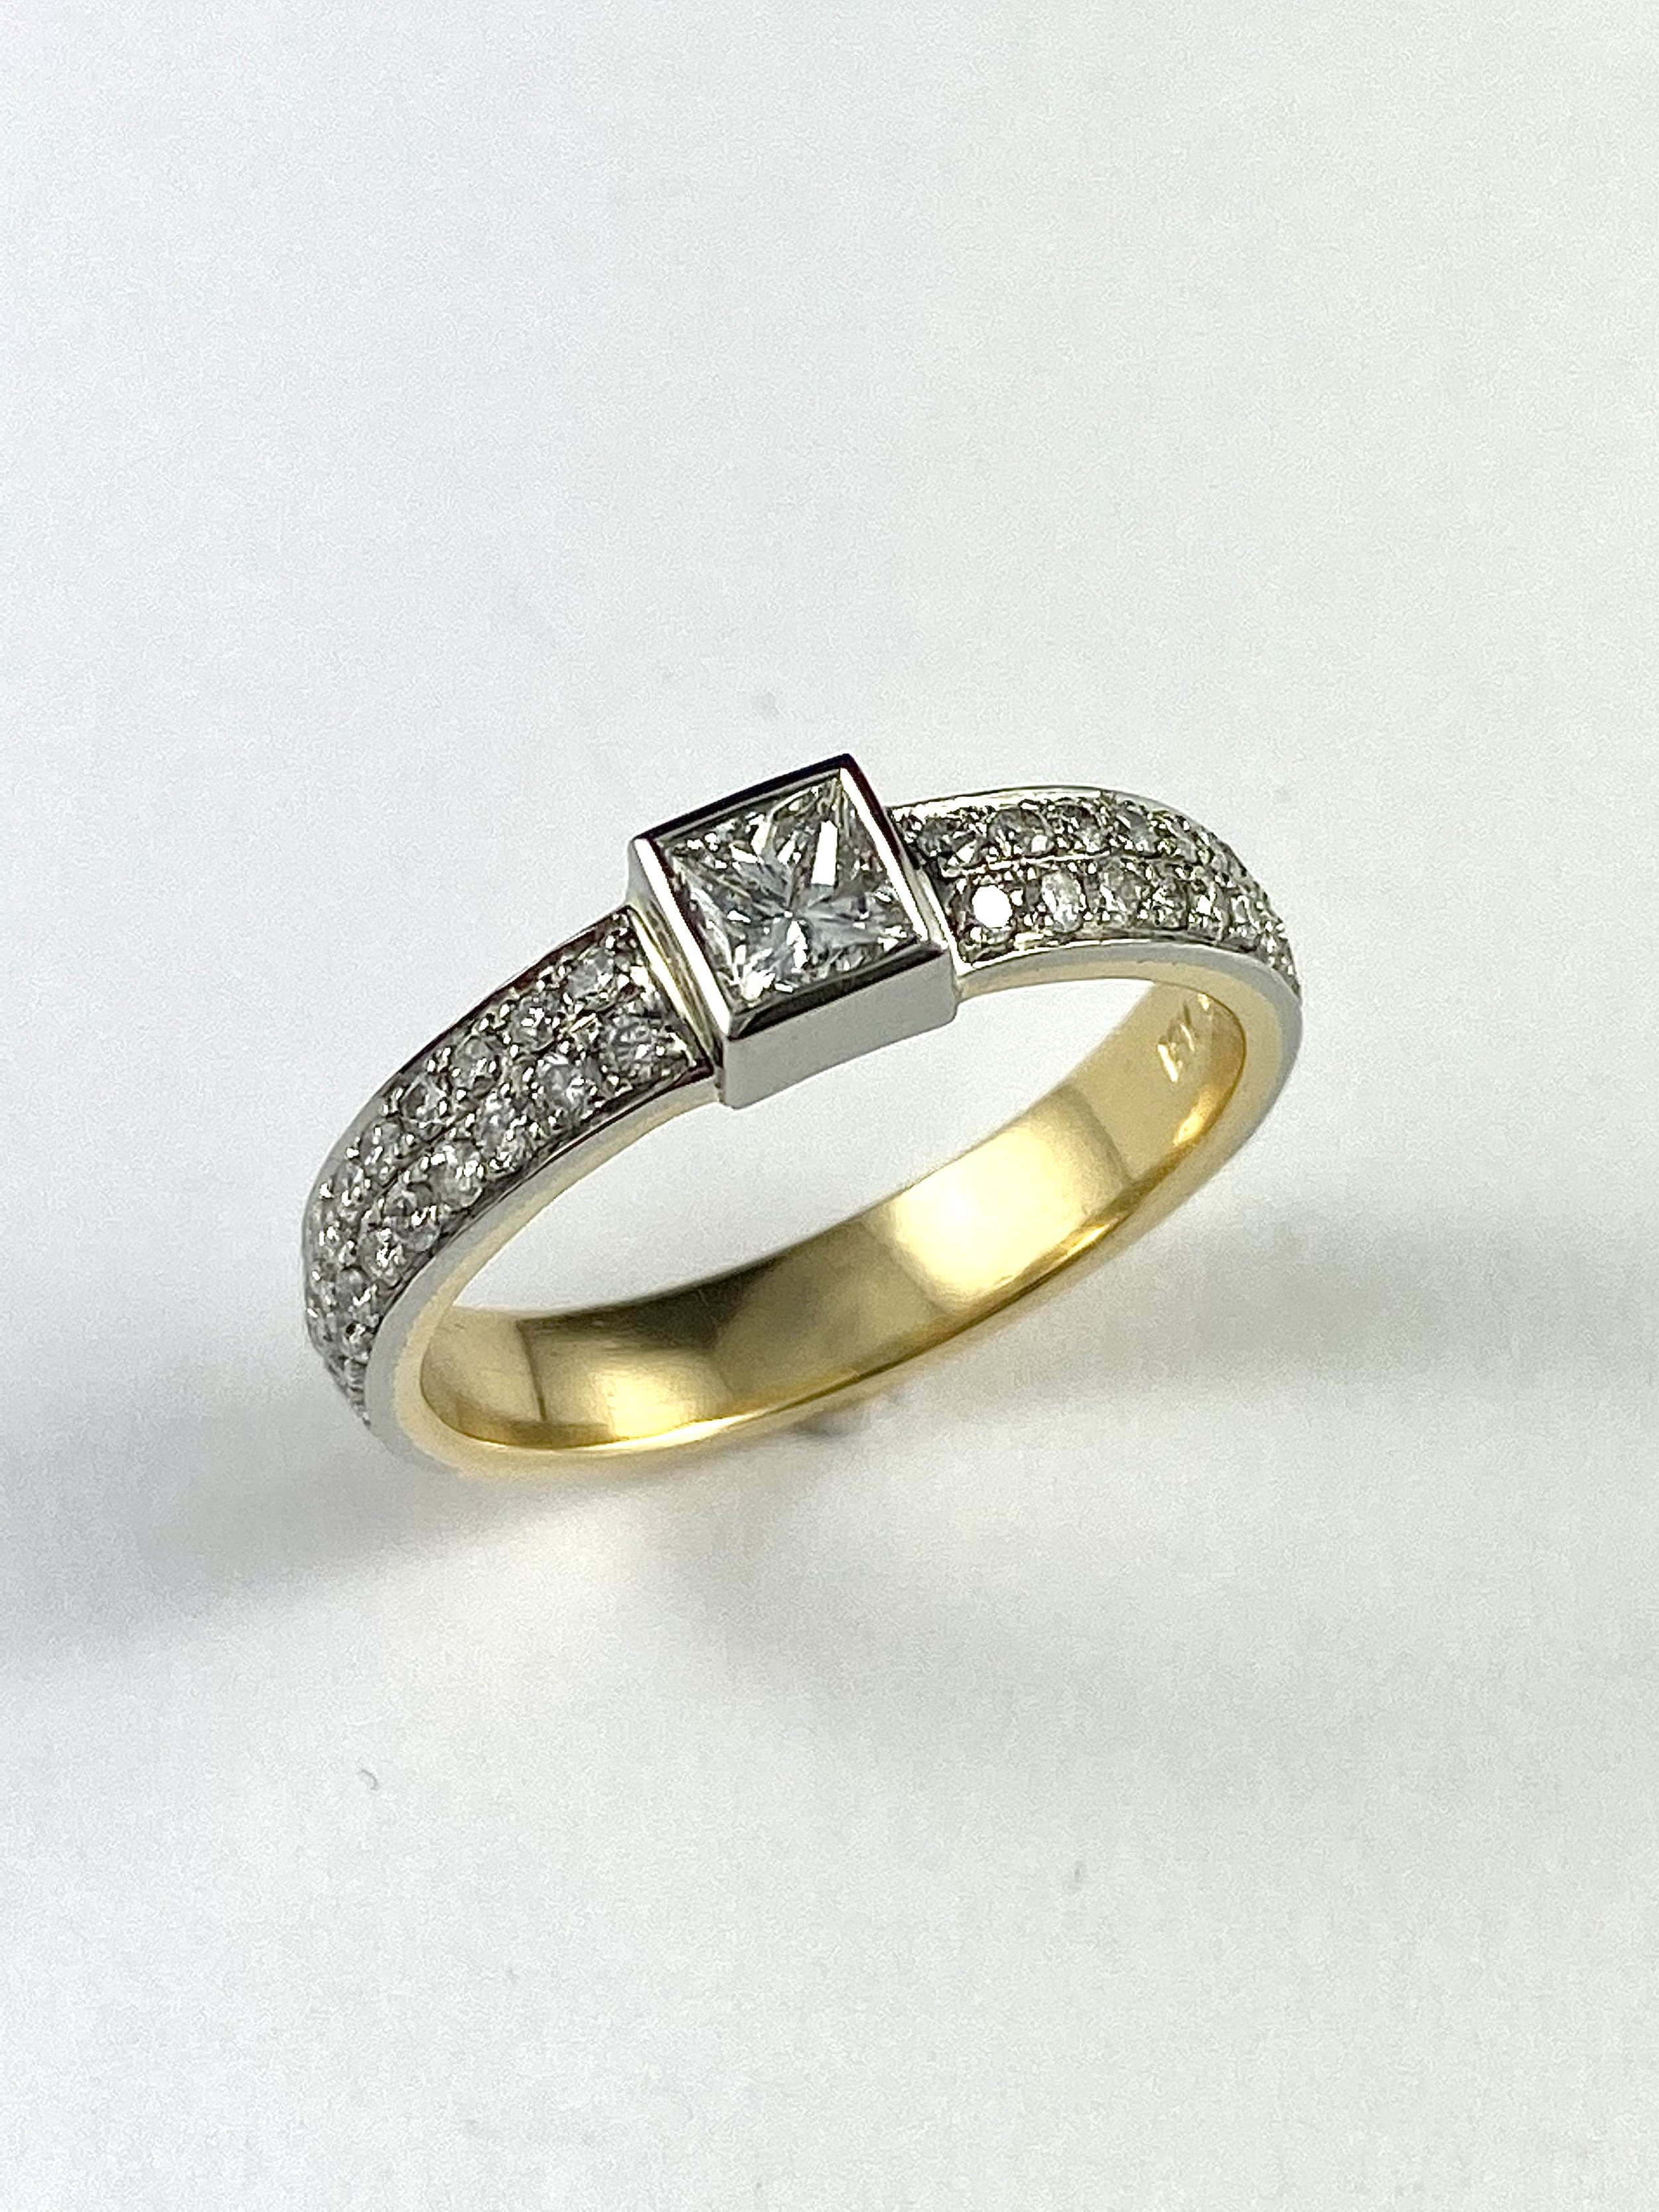 19K White 18K Yellow Gold Princess Cut Diamond Ring